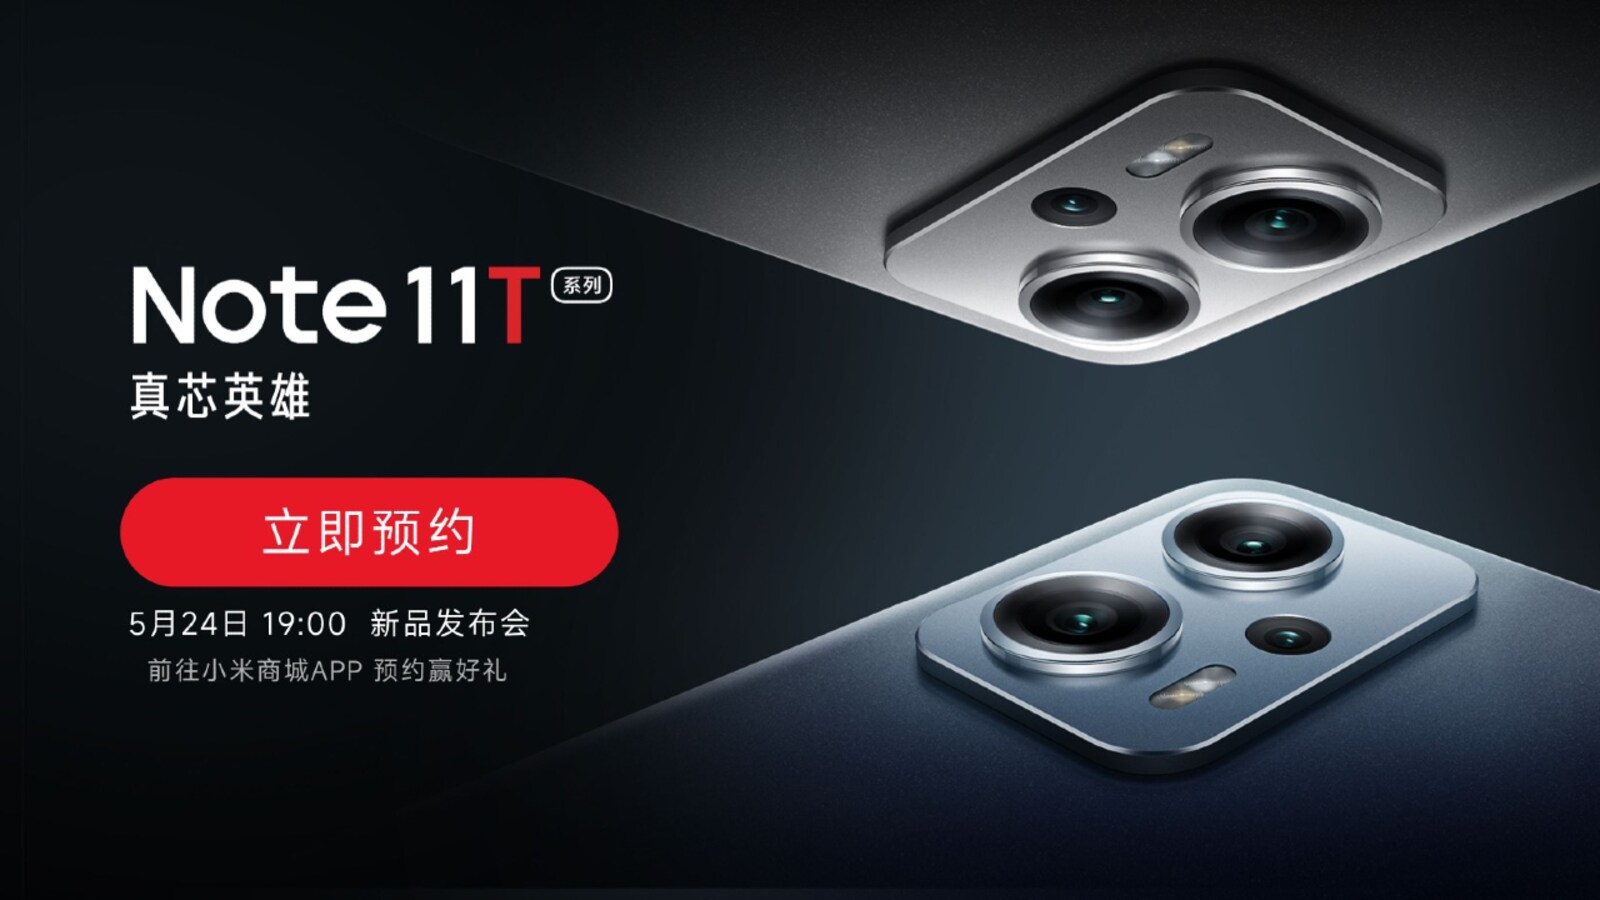 Xiaomi Redmi Note 11T Pro: Price, specs and best deals